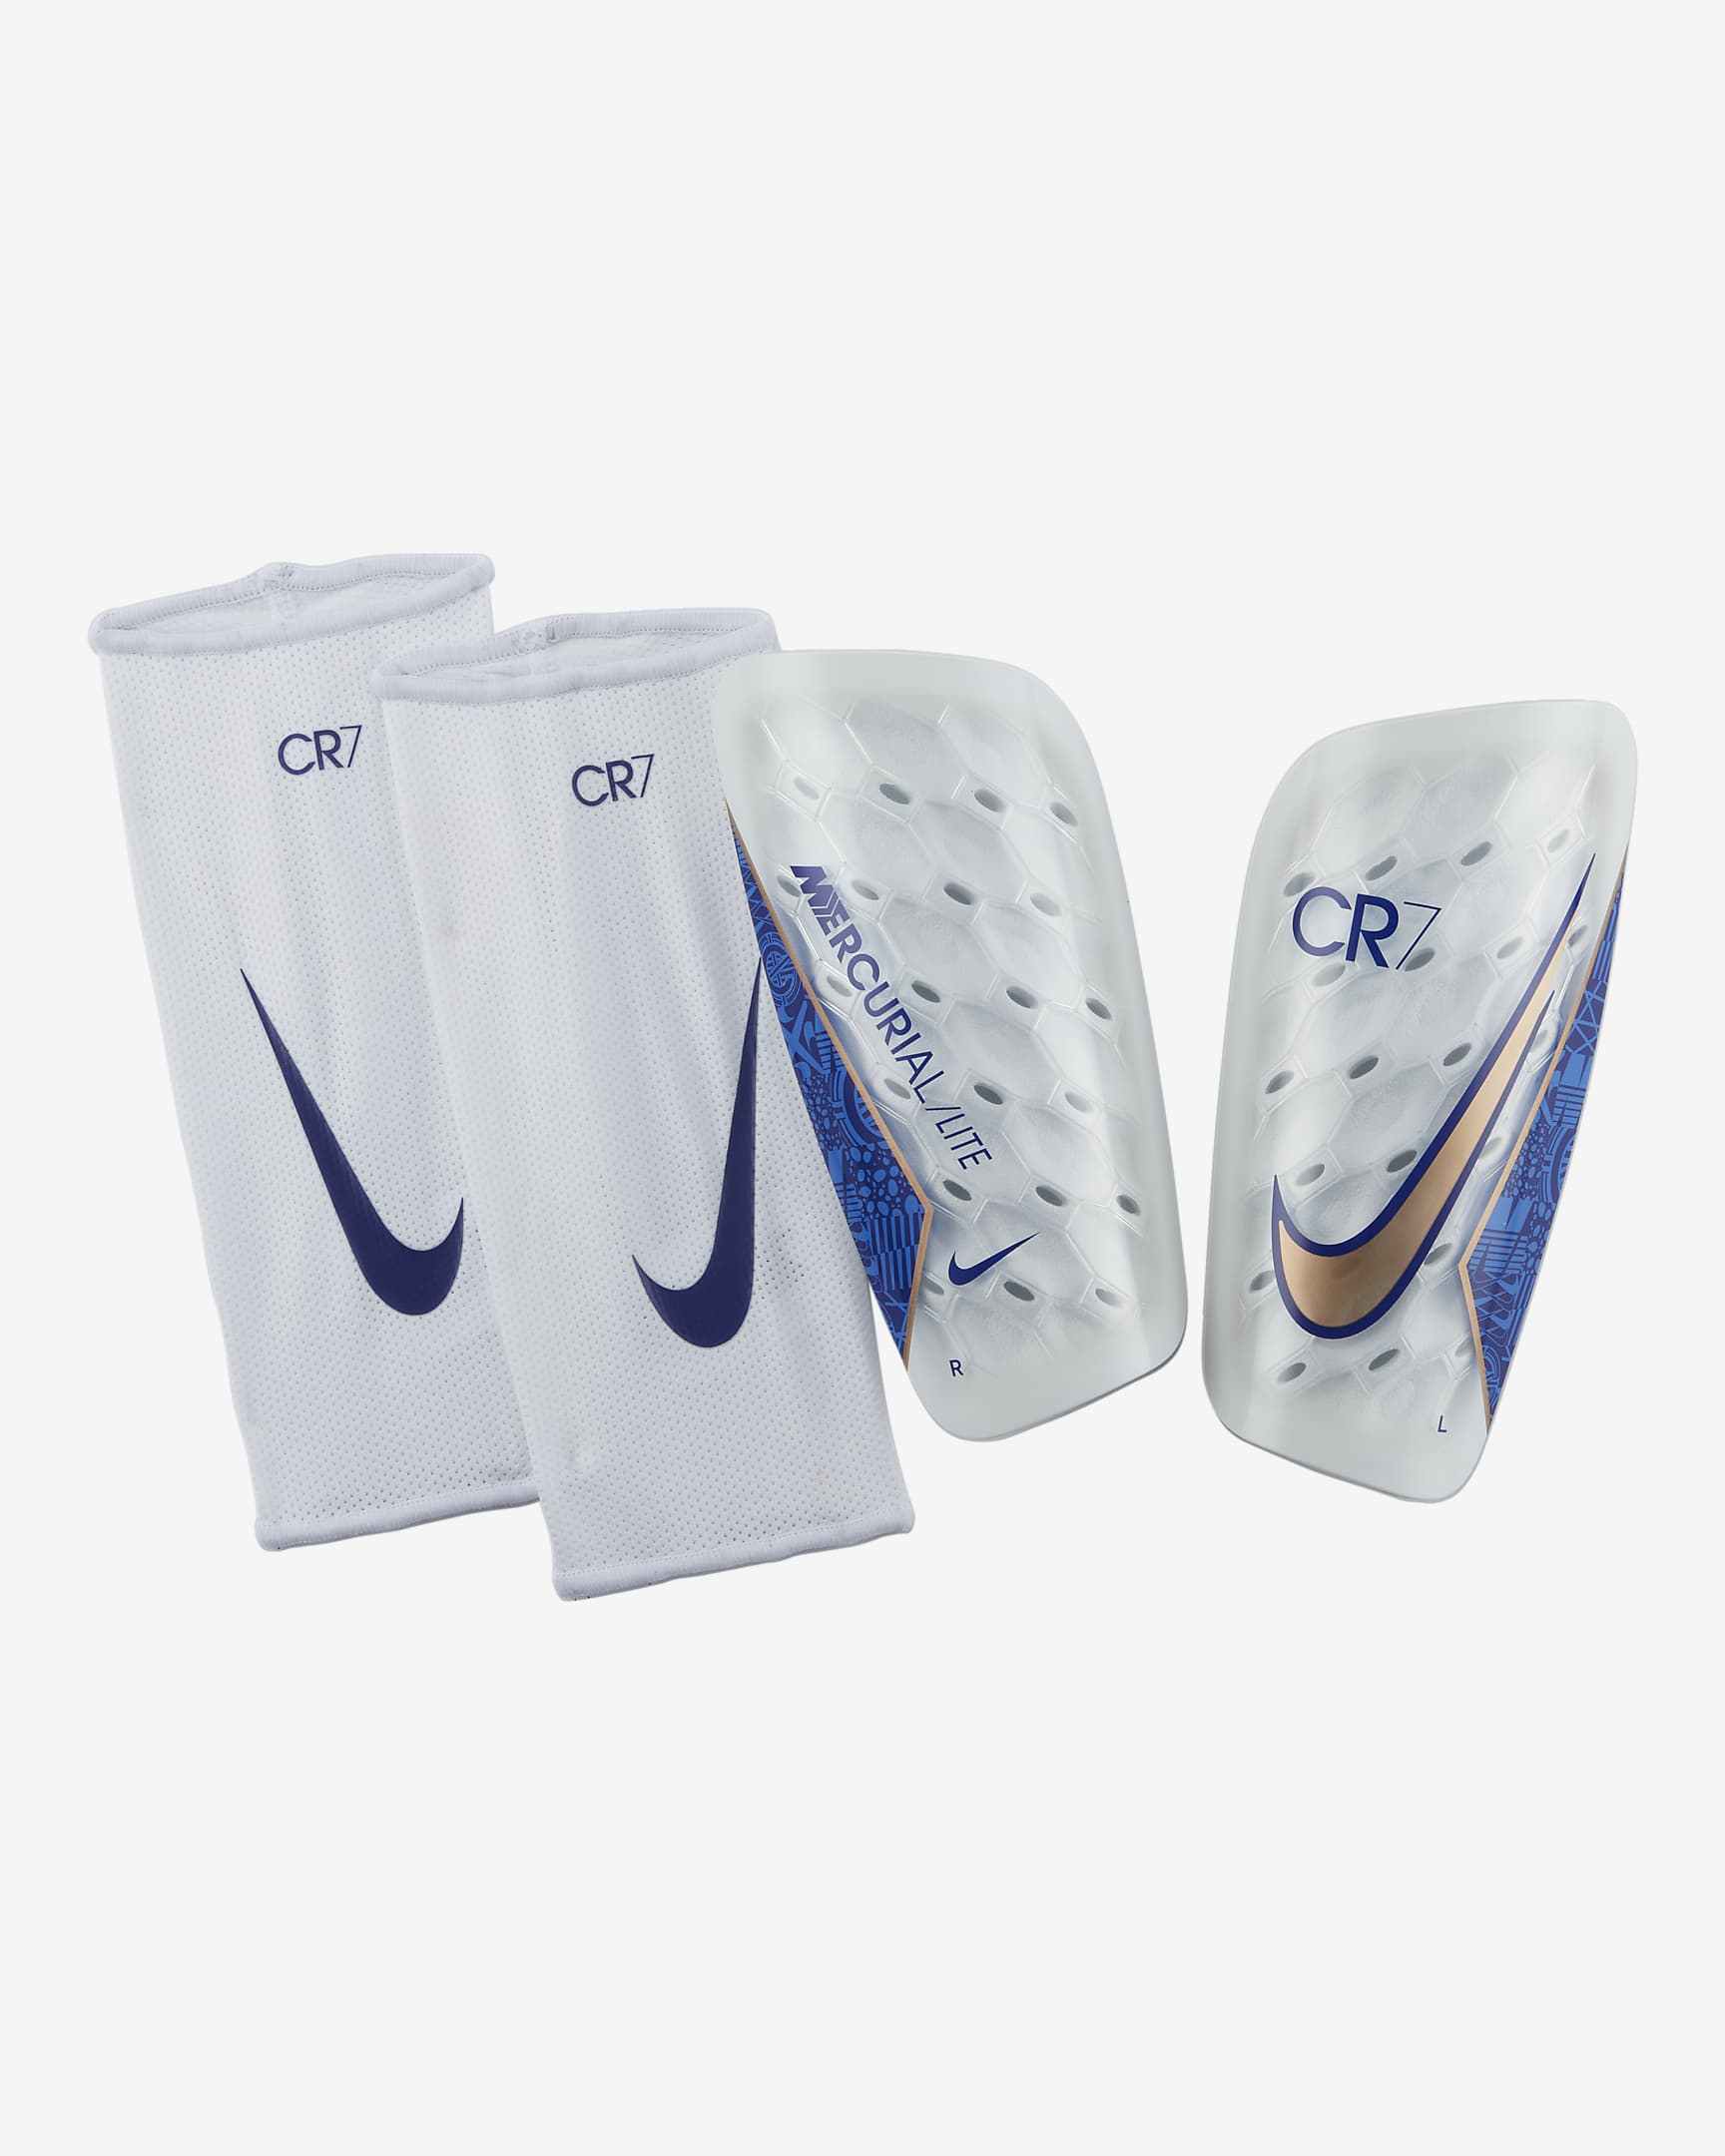 Nike Mercurial Lite CR7